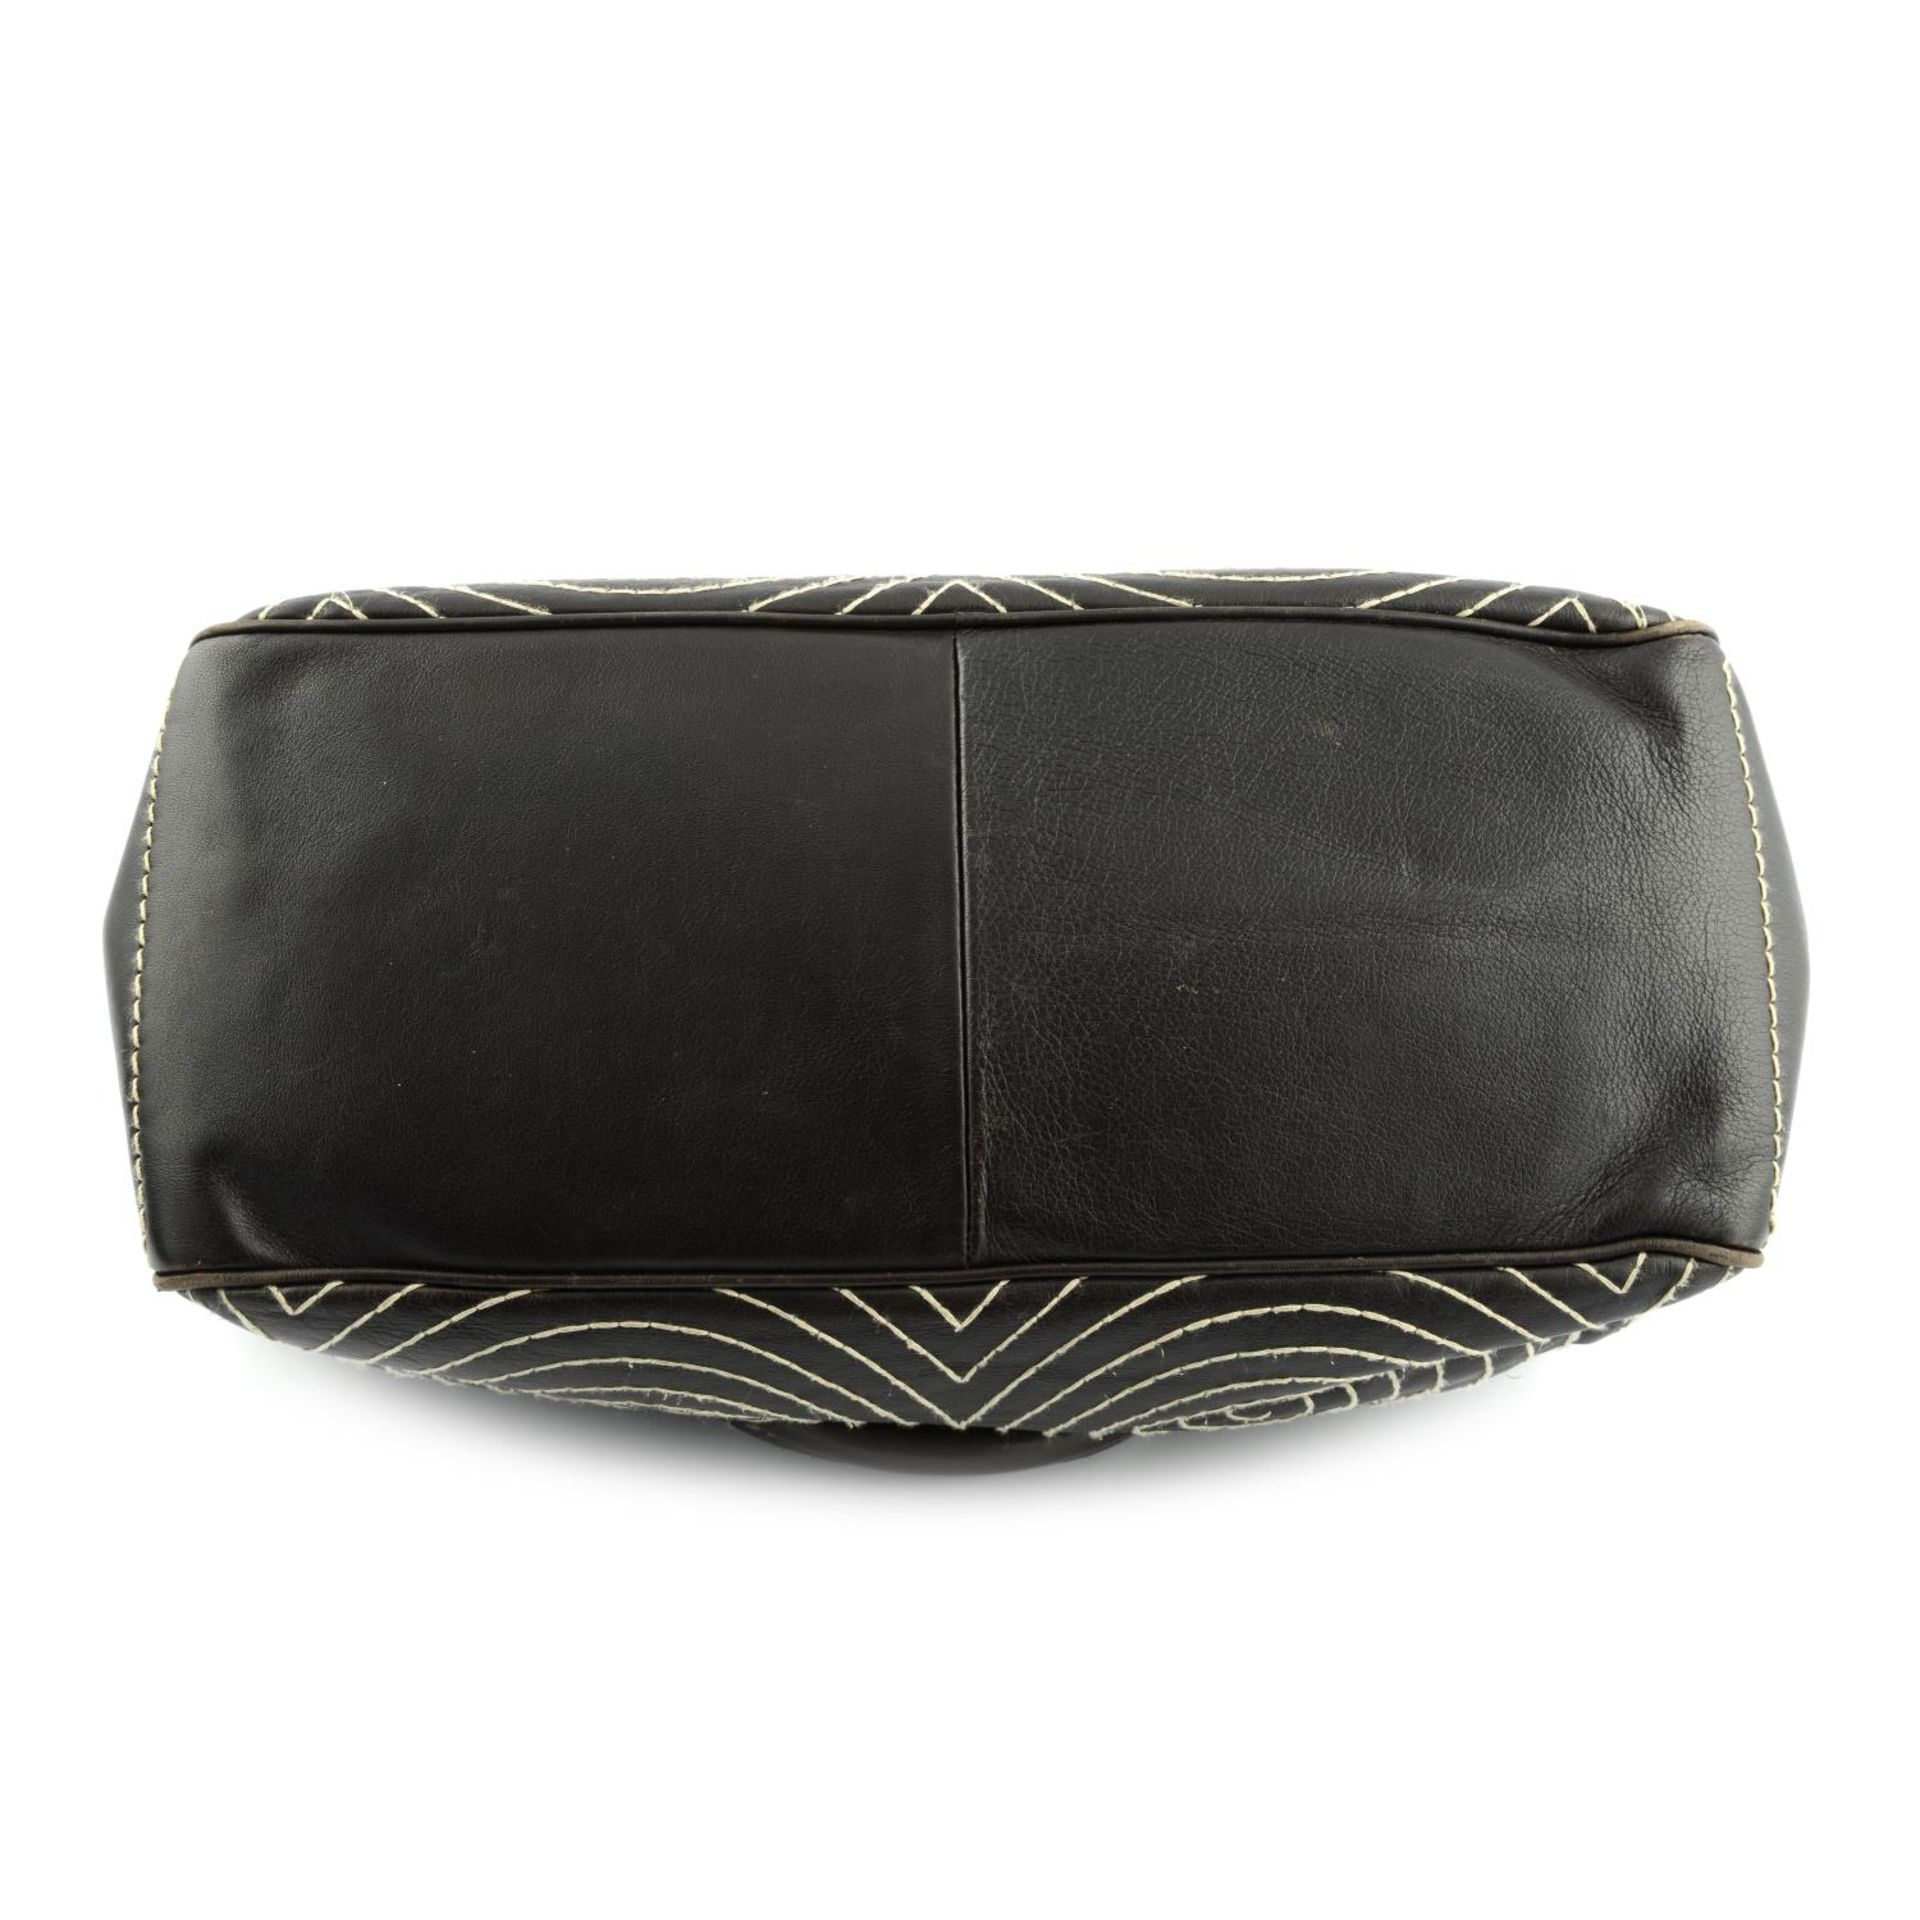 CÉLINE - a leather Boogie handbag. - Bild 4 aus 5